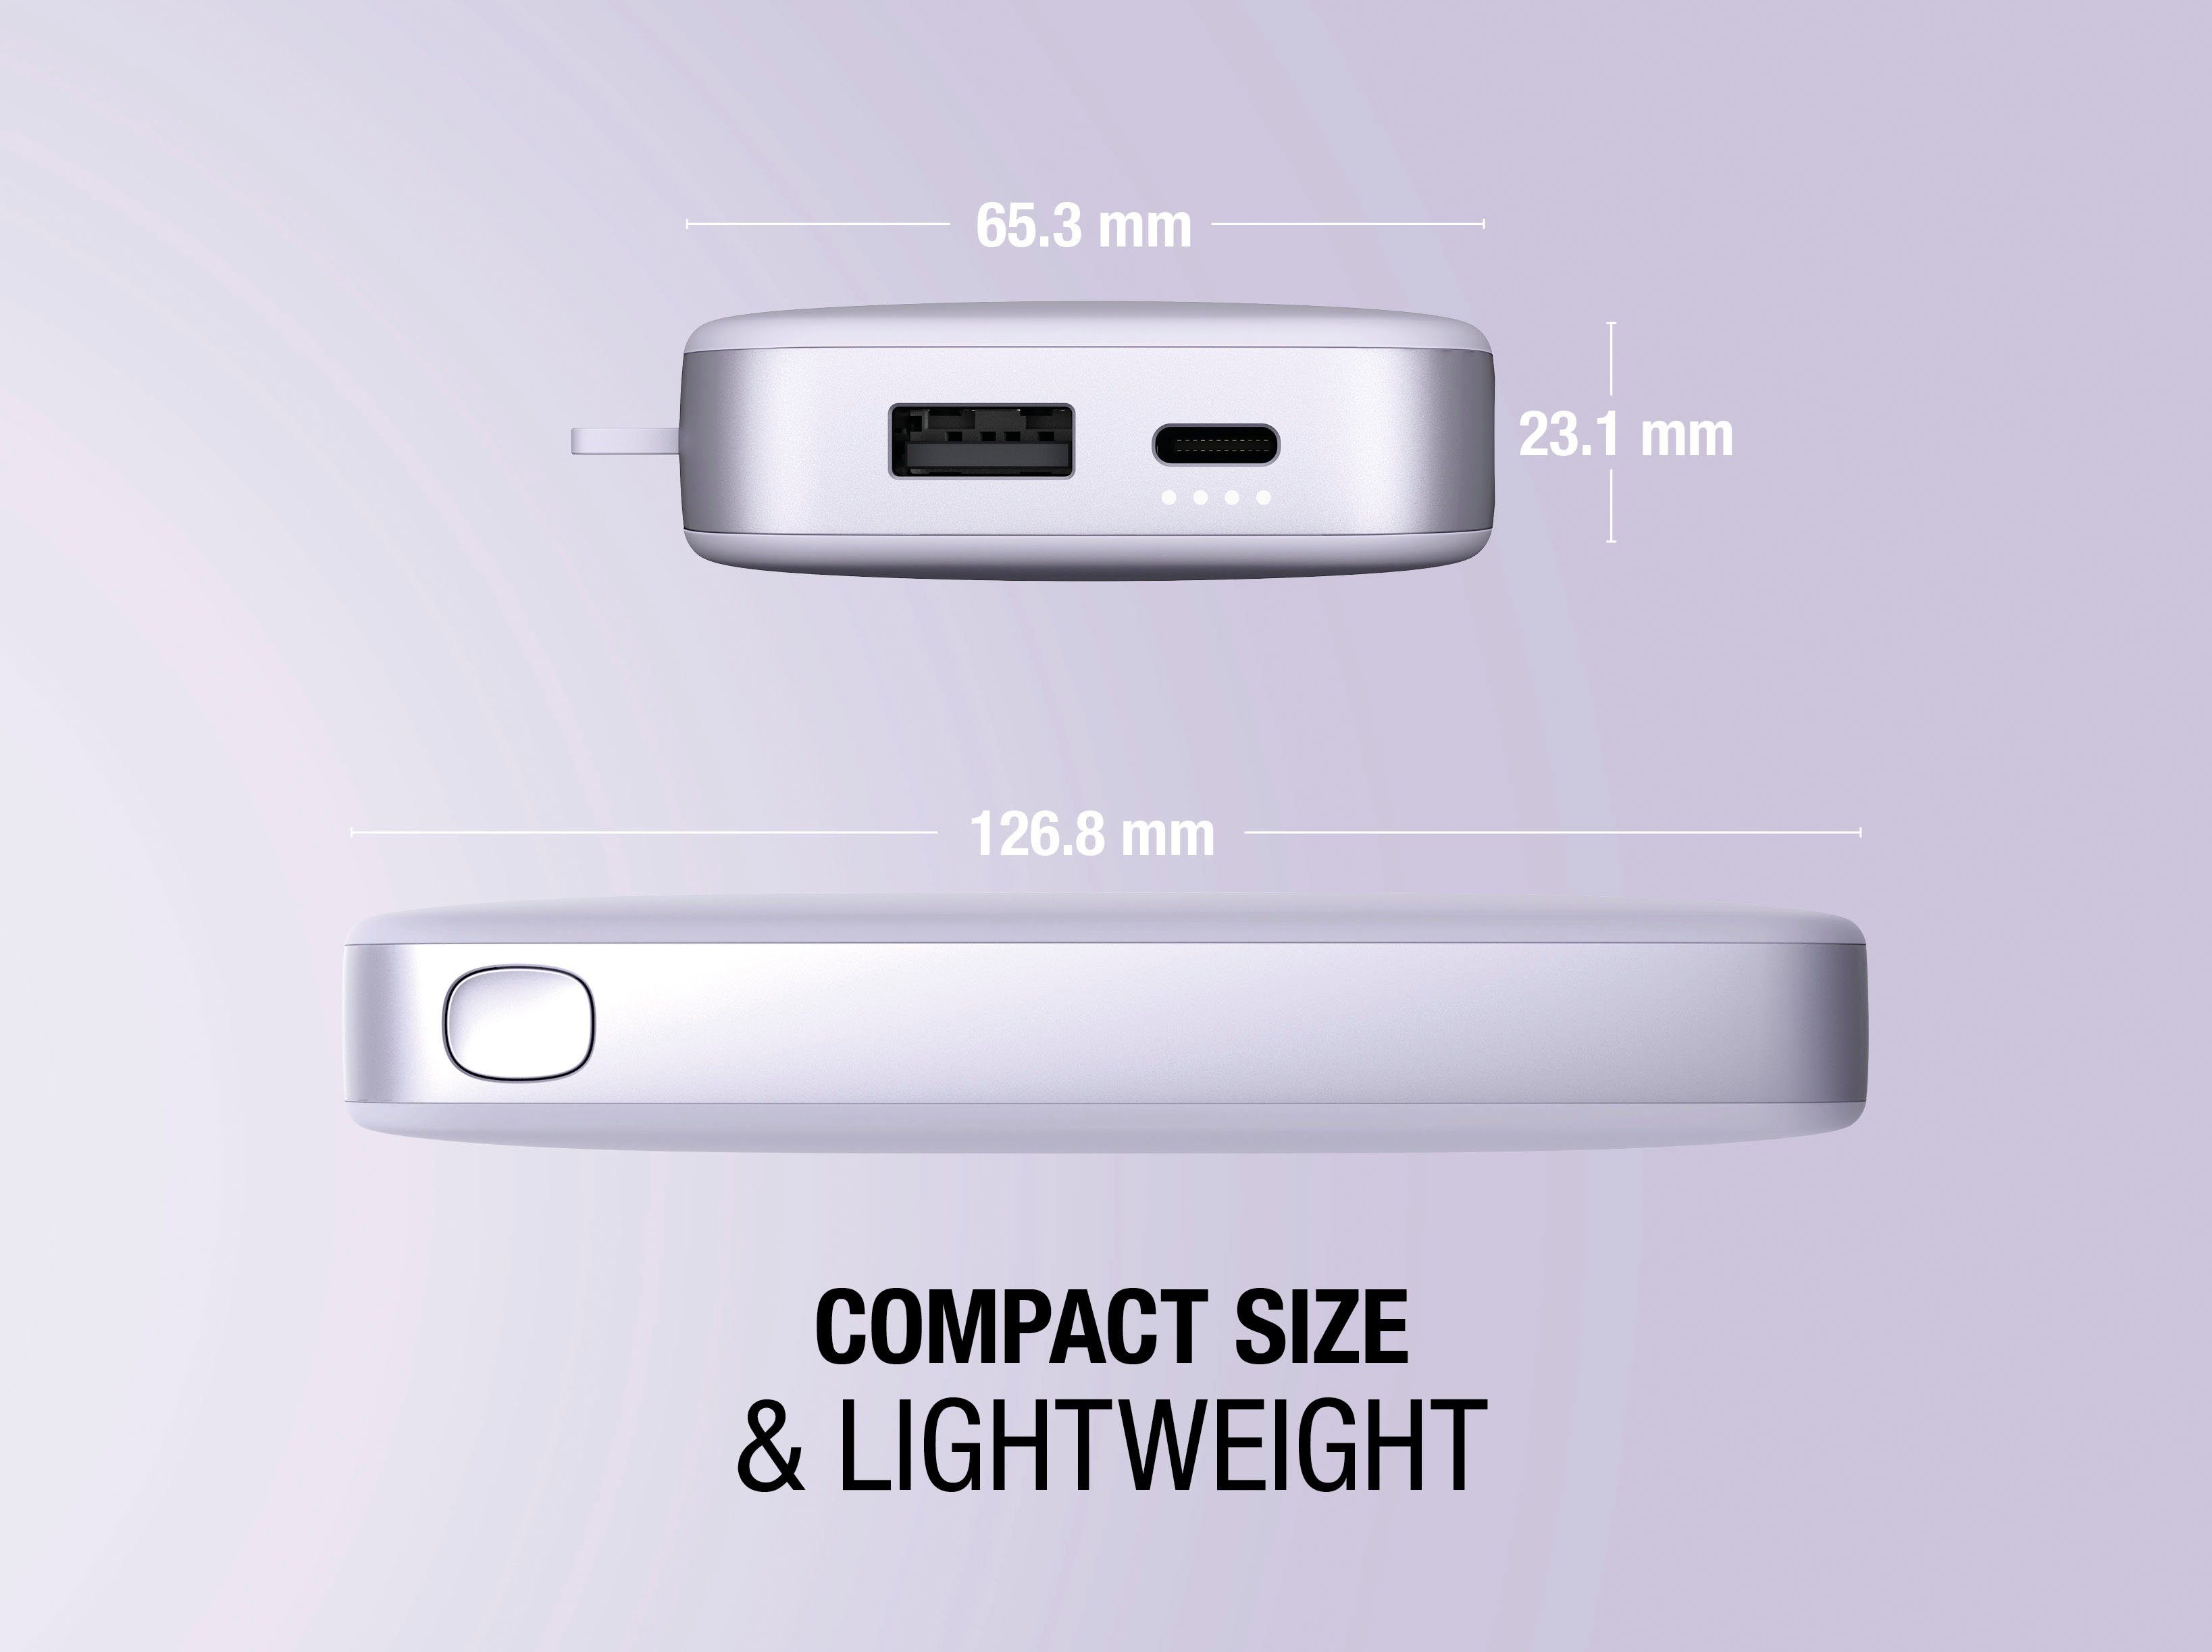 Power mit Ultra & lila Fast PD Charge USB-C, 12000mAh Fresh´n 20W Pack Rebel Powerbank